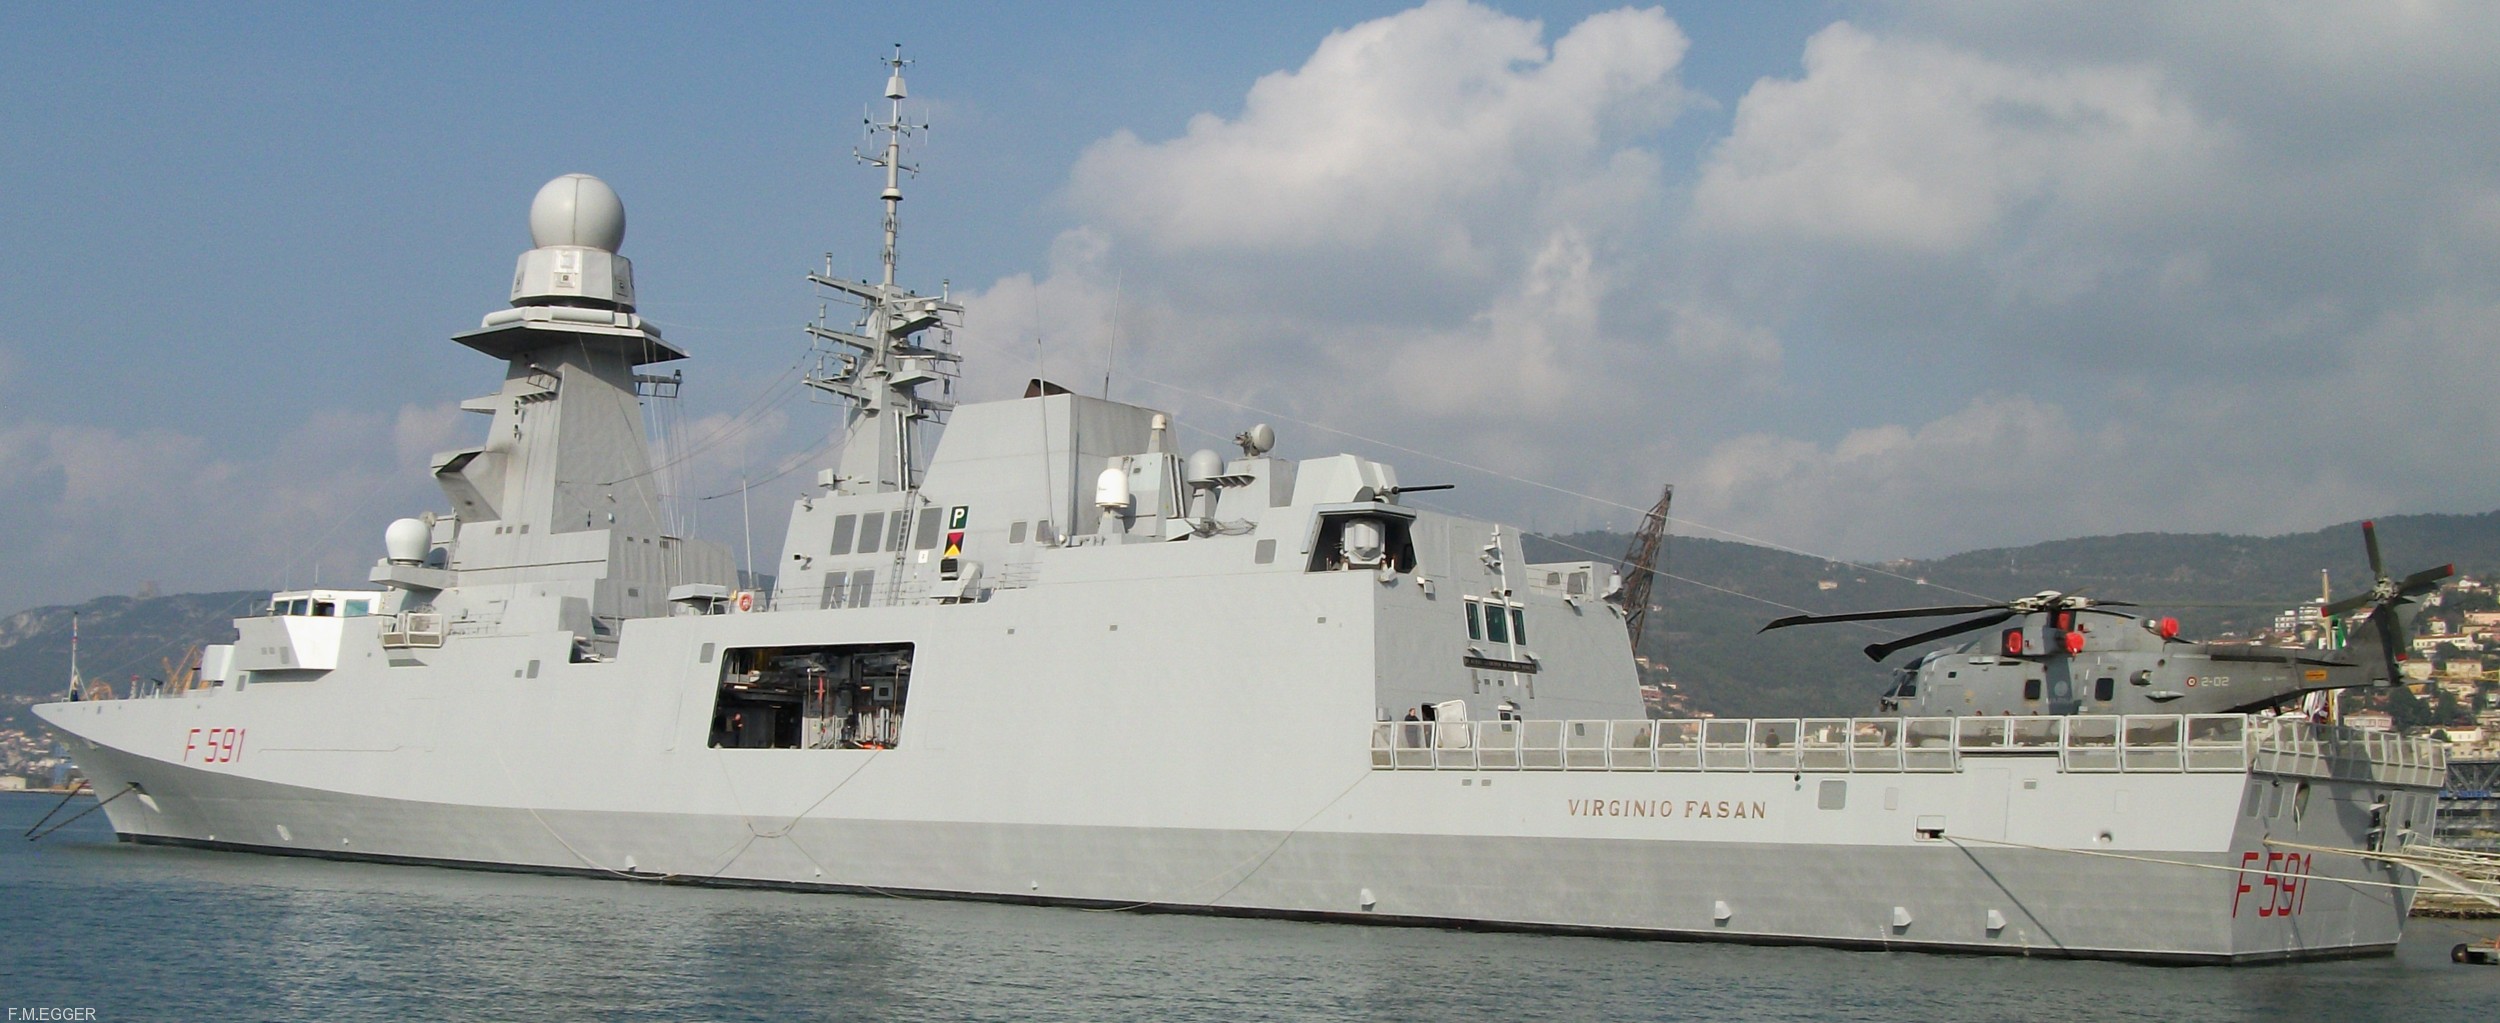 f-591 virginio fasan fremm bergamini class frigate italian navy marine militare 25a